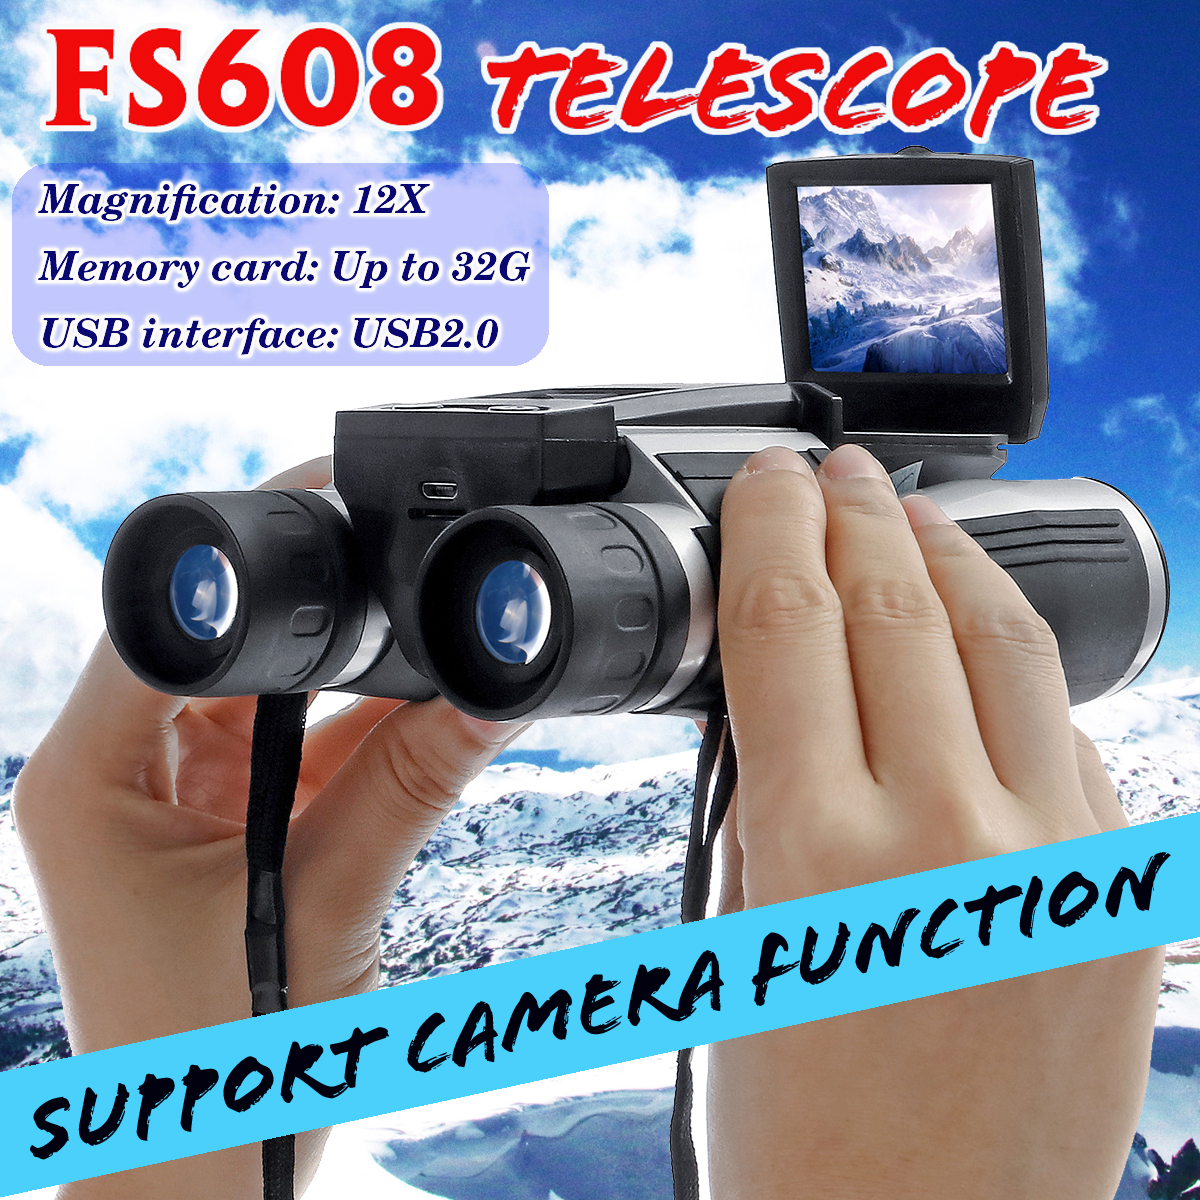 12x32-Binocular-Digital-Telescope-1080P-Camera-Video-Recording-Photo-Shooting-Outdoor-Camping-1458488